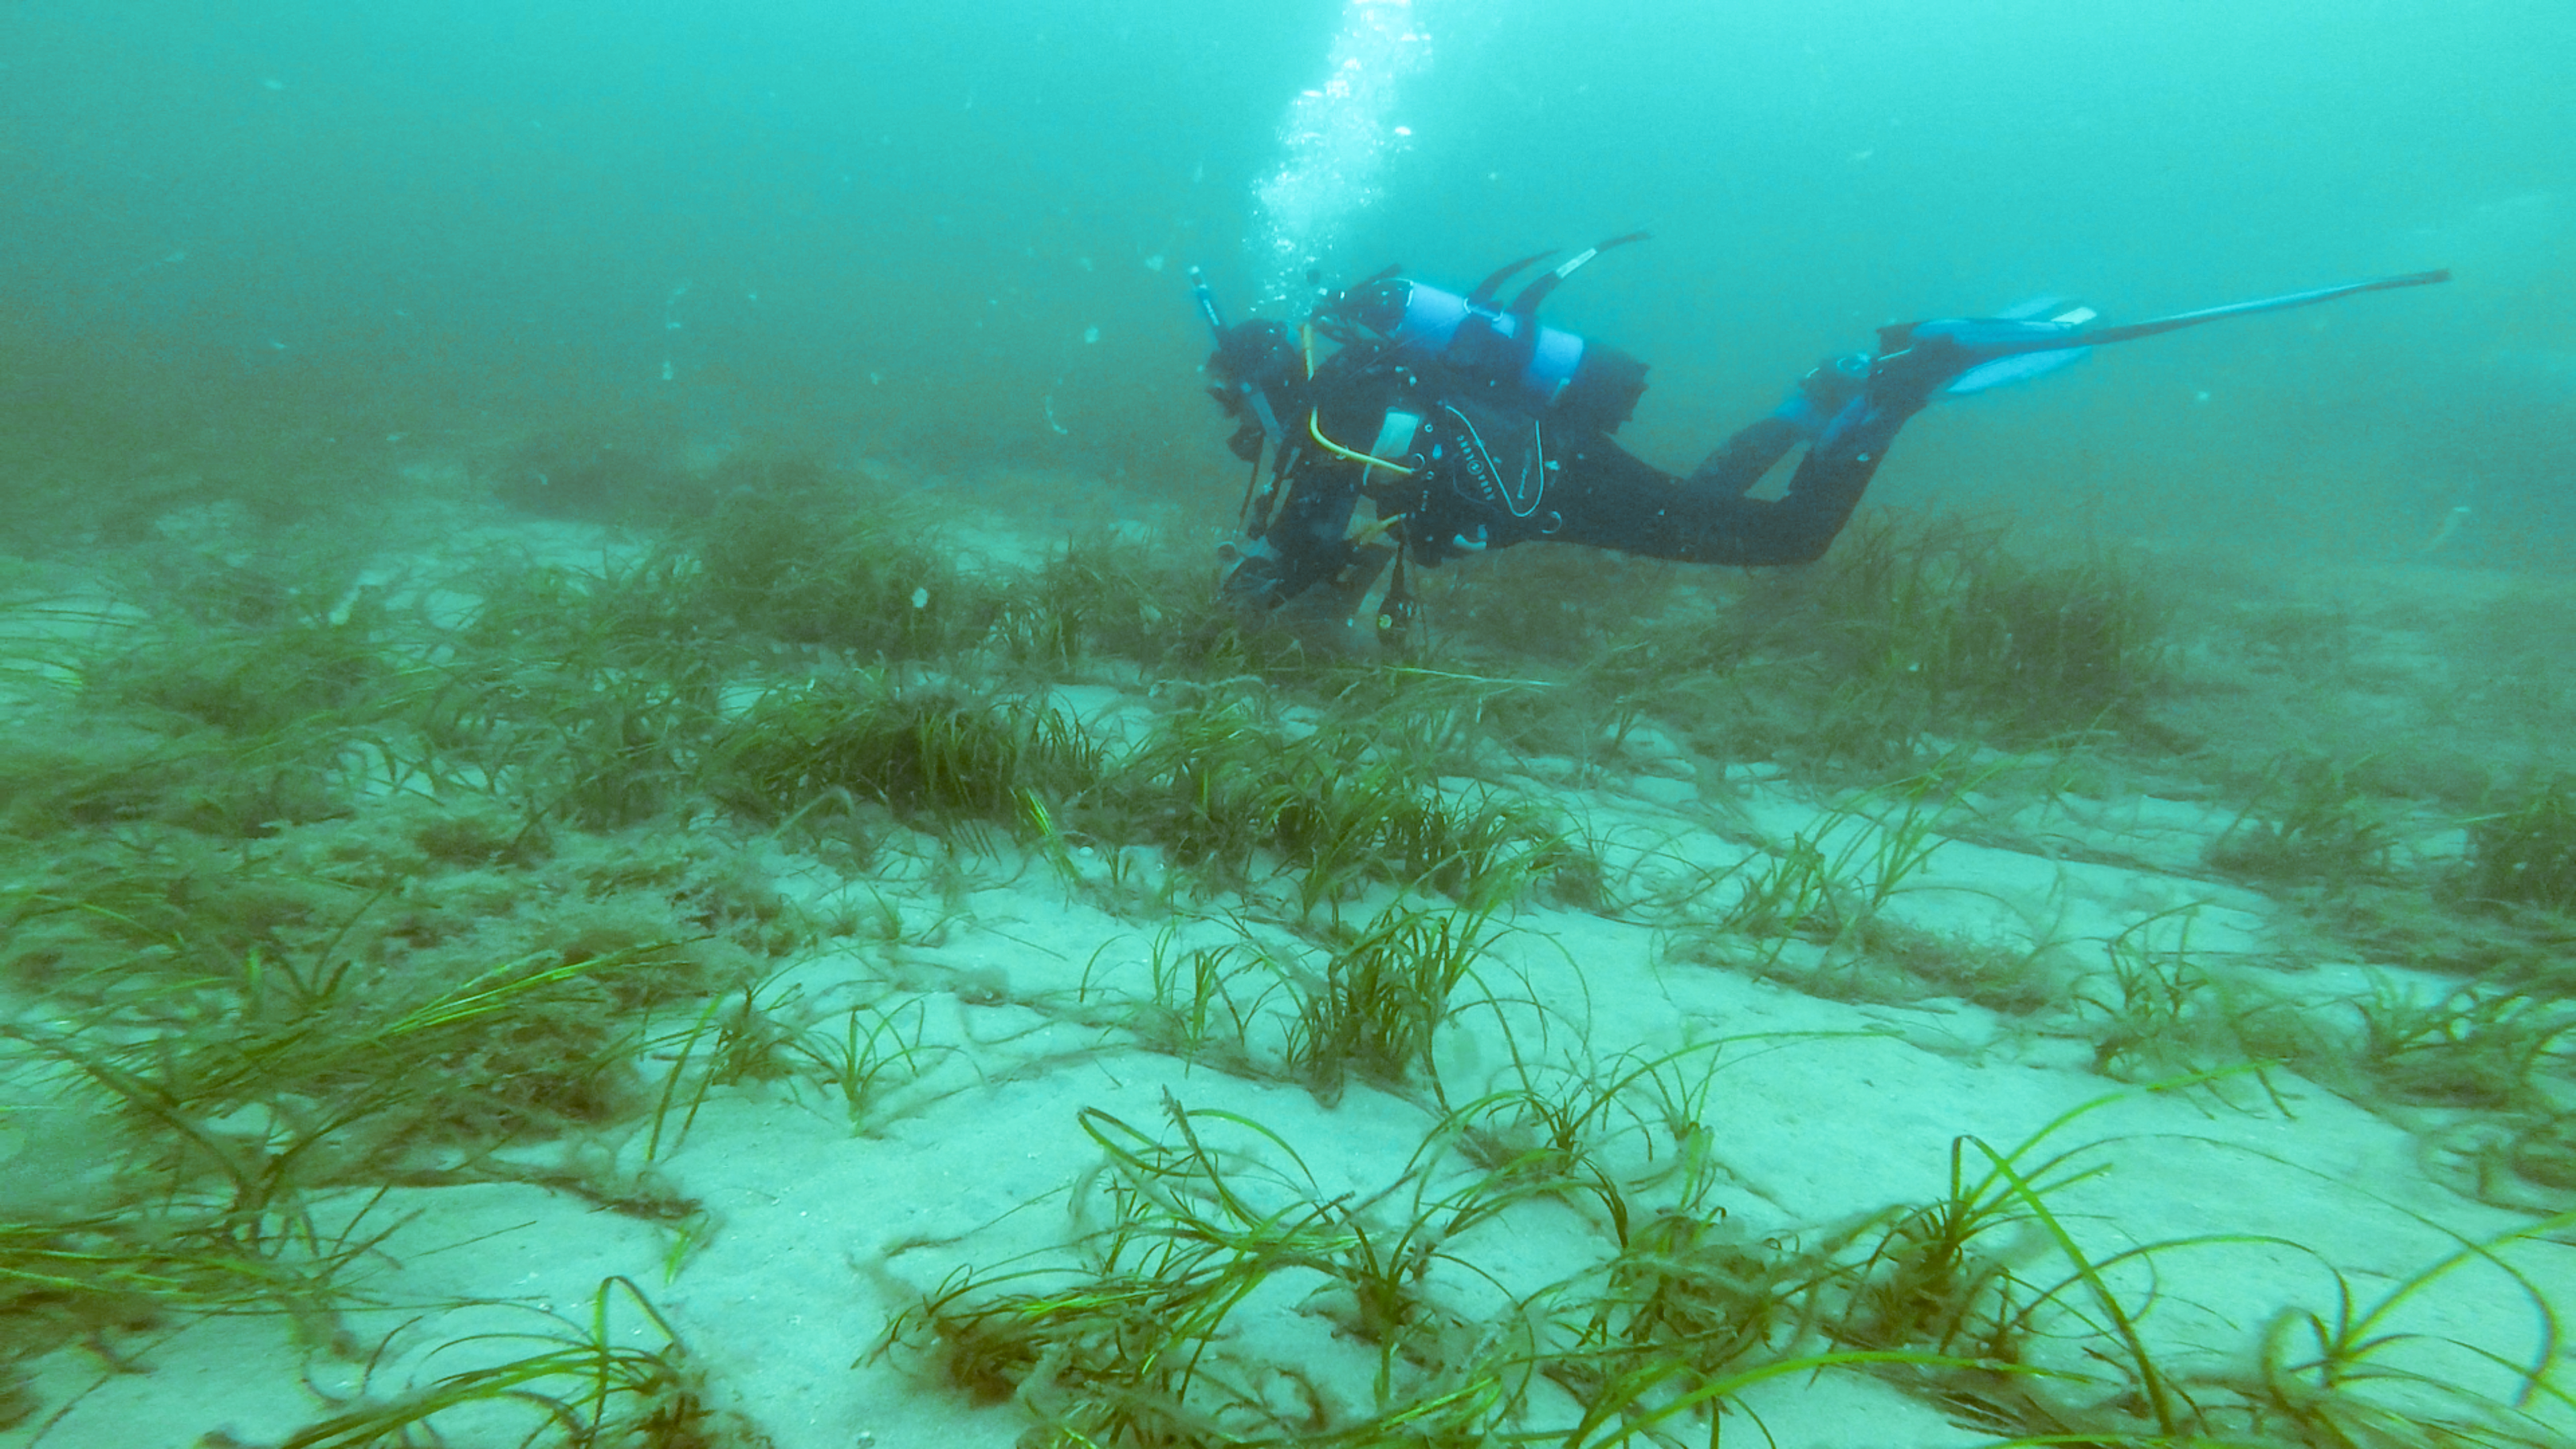 A diver undergoing seagrass restoration